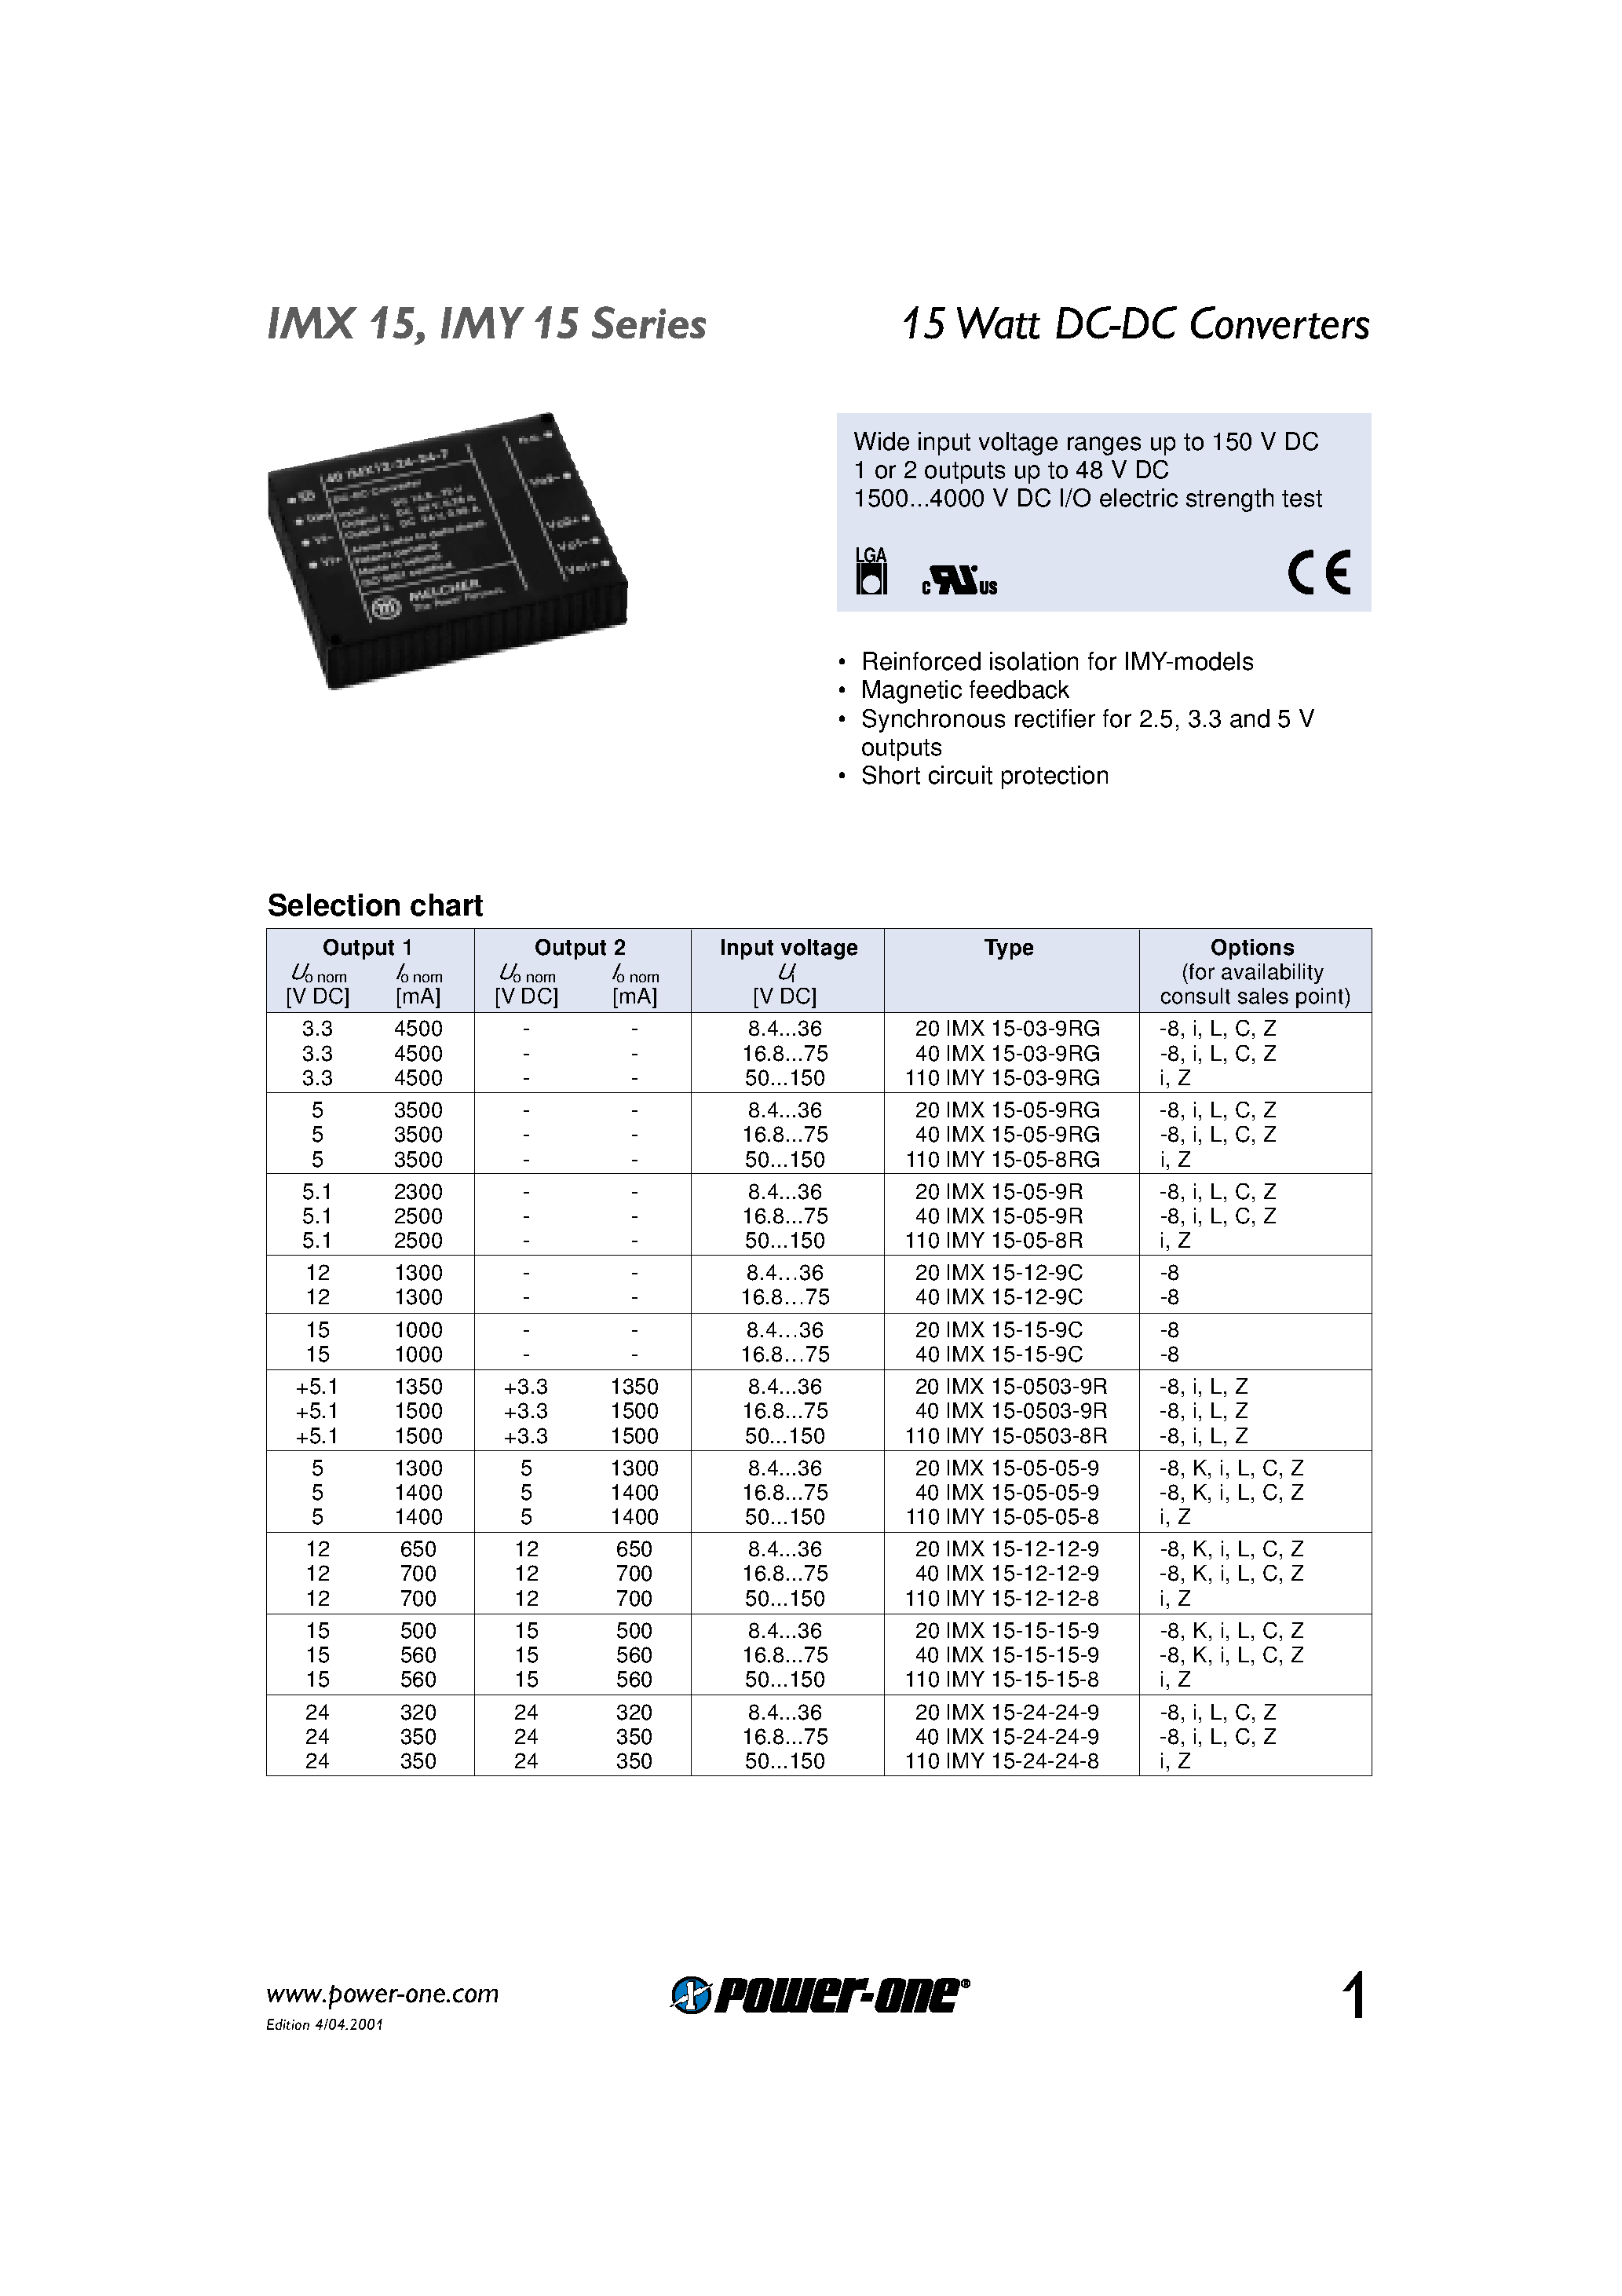 Datasheet 40IMX15-15-15-9 - 15 Watt DC-DC Converters page 1